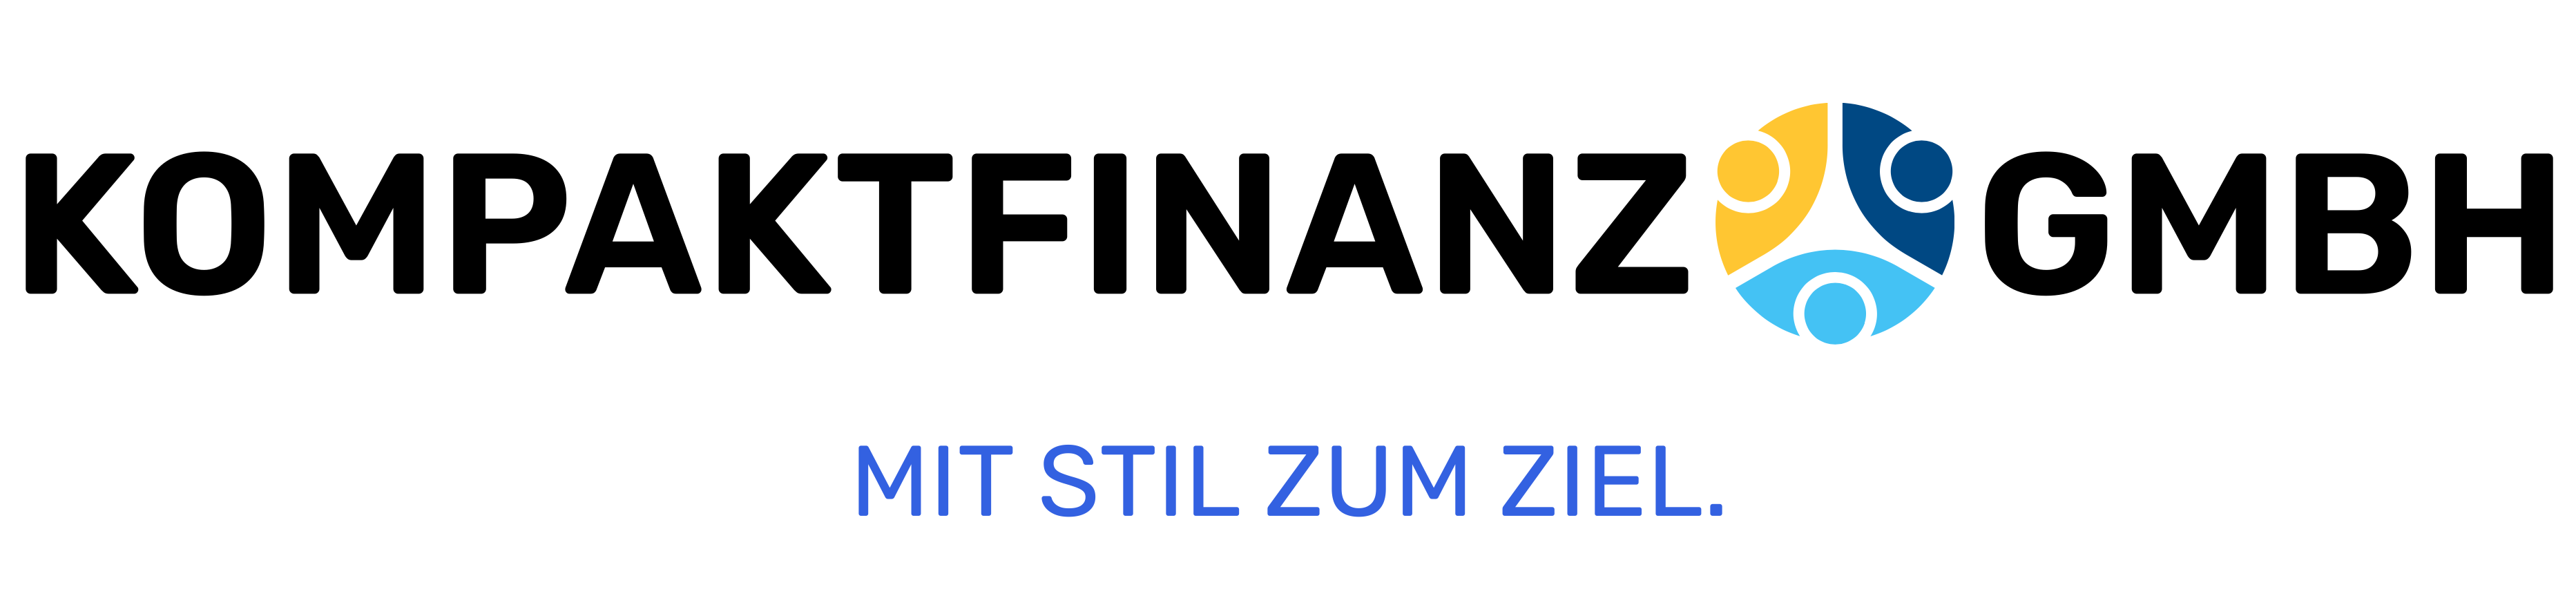 Kompaktfinanz GmbH